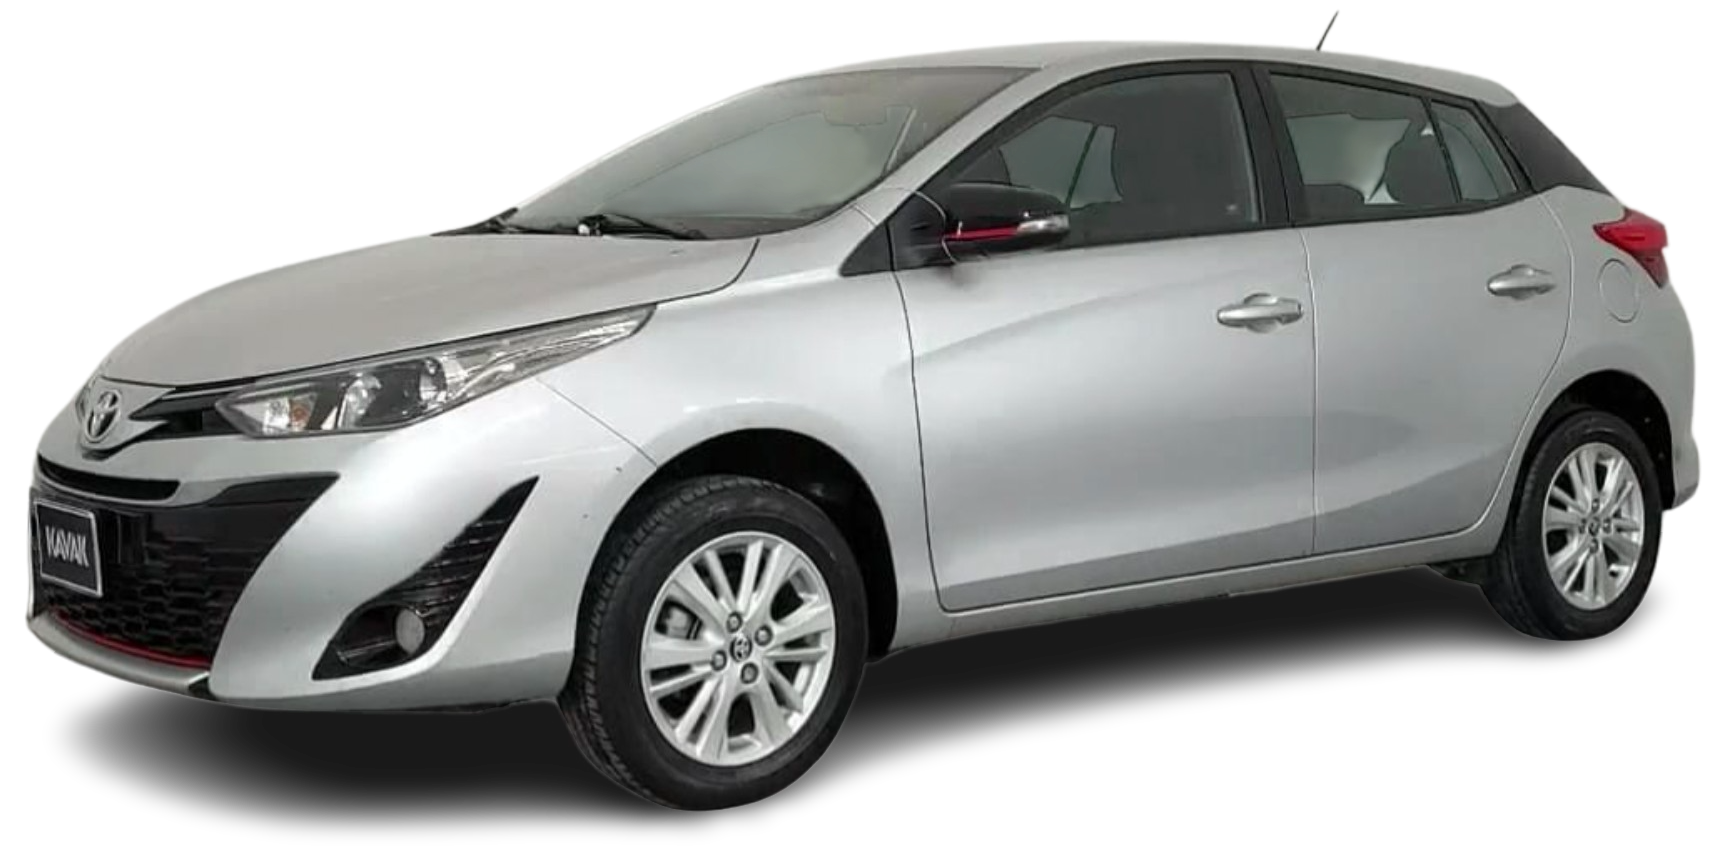 Toyota Yaris Sedan 2022 2021 2020 2019 2018 2017 2016 2015 2014 2013 2012 2011 2010